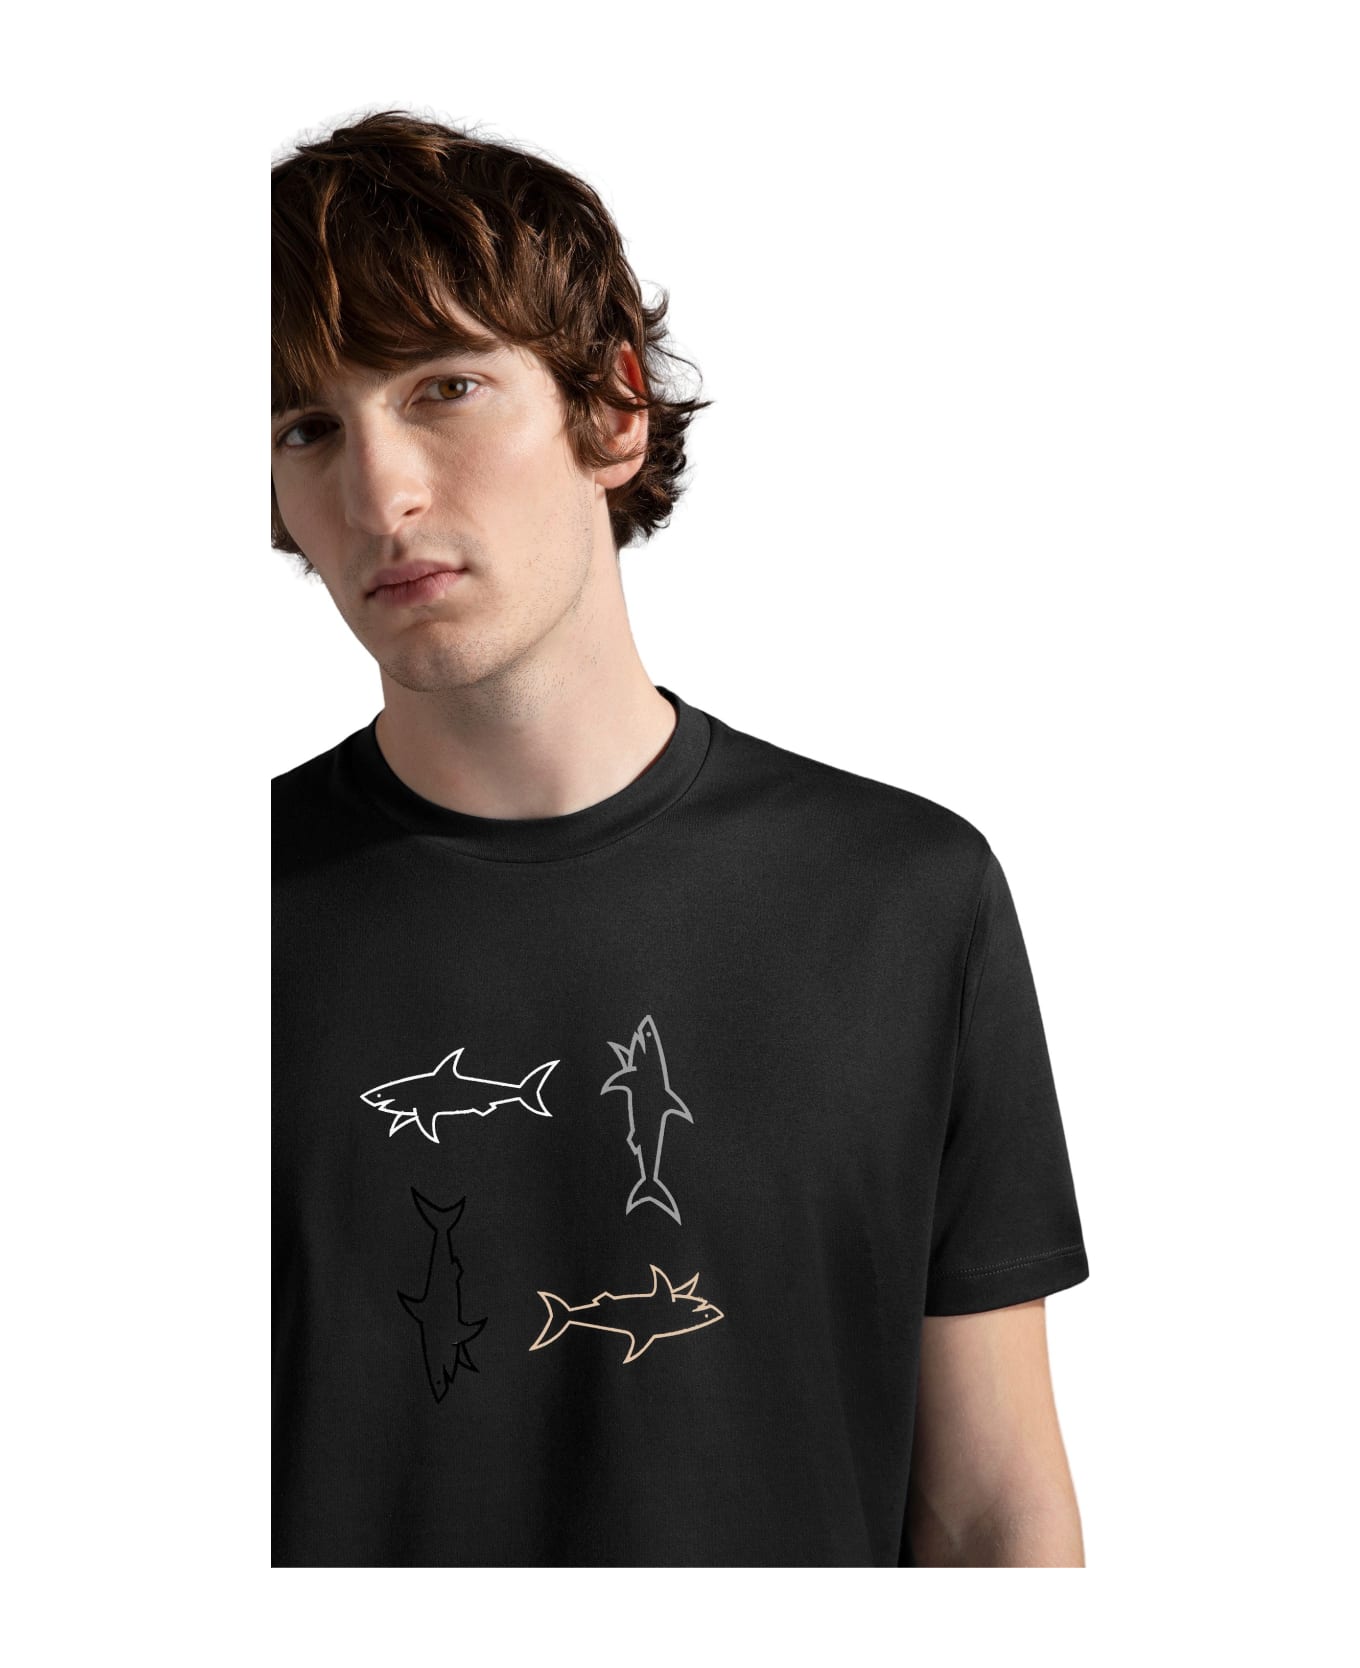 Paul&Shark Tshirt - Black